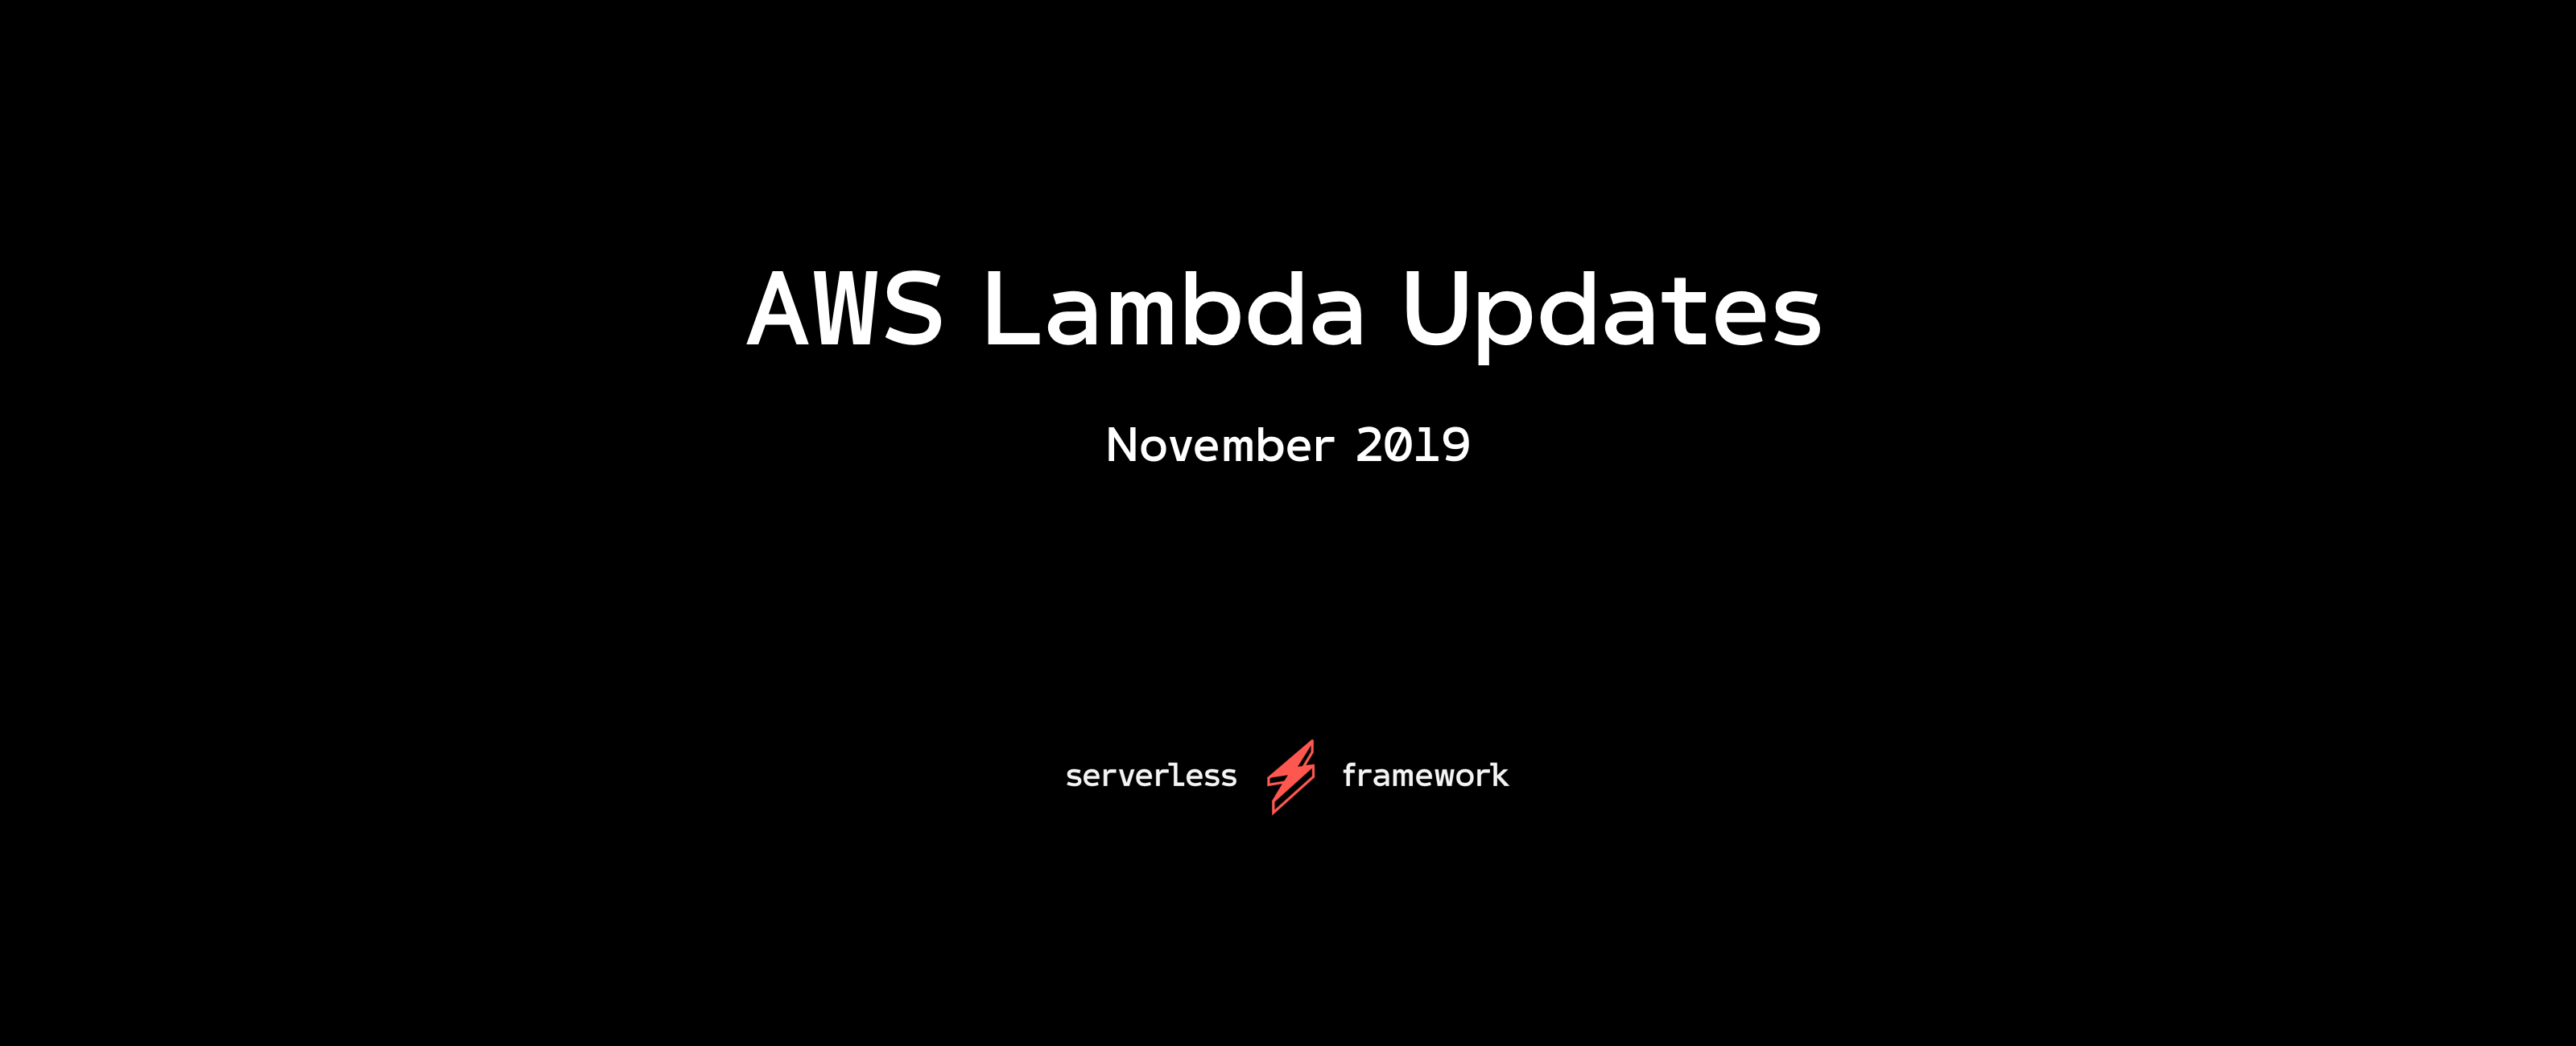 November 2019 - New AWS Lambda Features